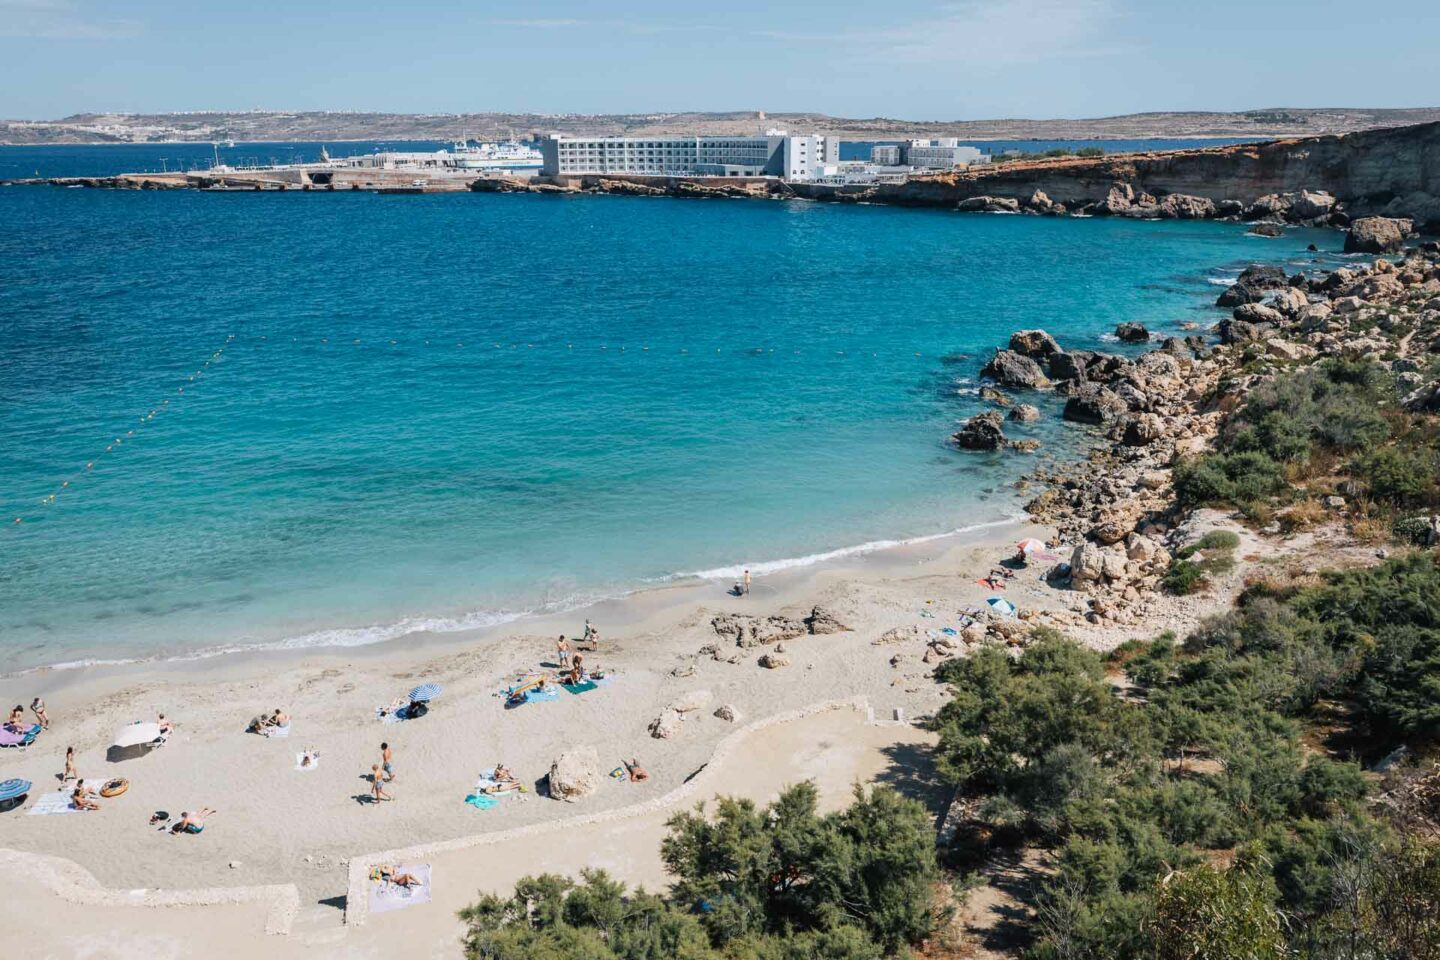 paradise bay beach, paradise bay beach malta, malta paradise bay beach, paradise bay malta beach, the beach at paradise bay, paradise bay malta